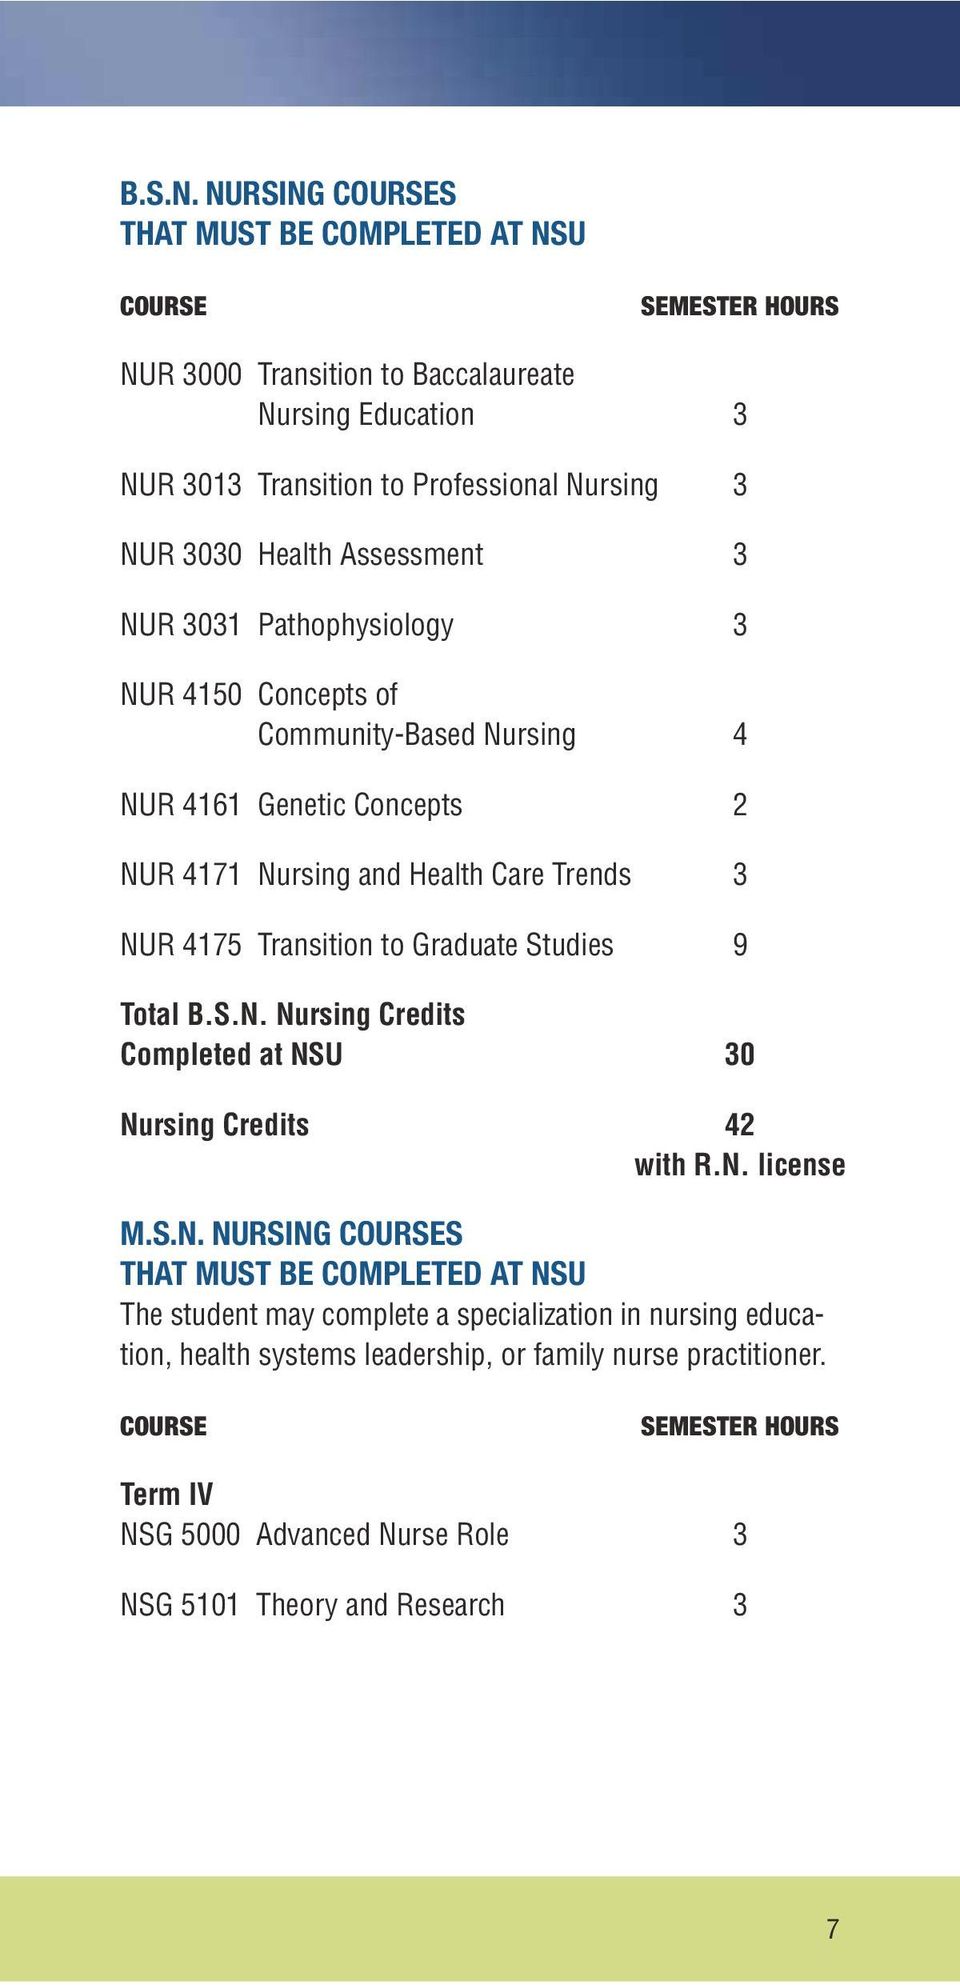 Assessment 3 NUR 3031 Pathophysiology 3 NUR 4150 Concepts of Community-Based Nursing 4 NUR 4161 Genetic Concepts 2 NUR 4171 Nursing and Health Care Trends 3 NUR 4175 Transition to